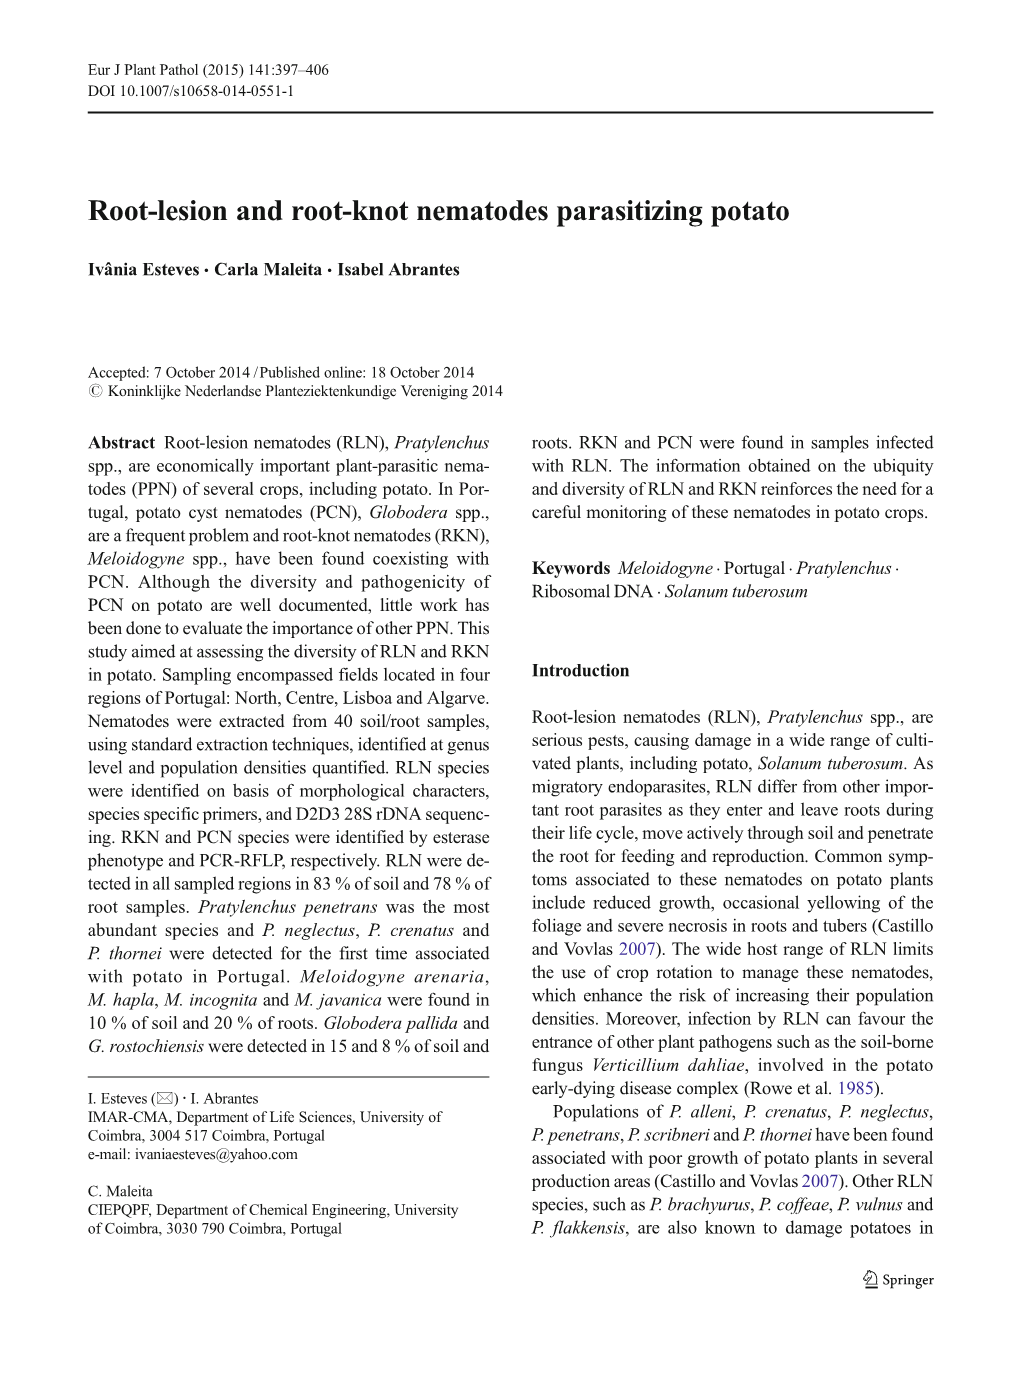 Root-Lesion and Root-Knot Nematodes Parasitizing Potato